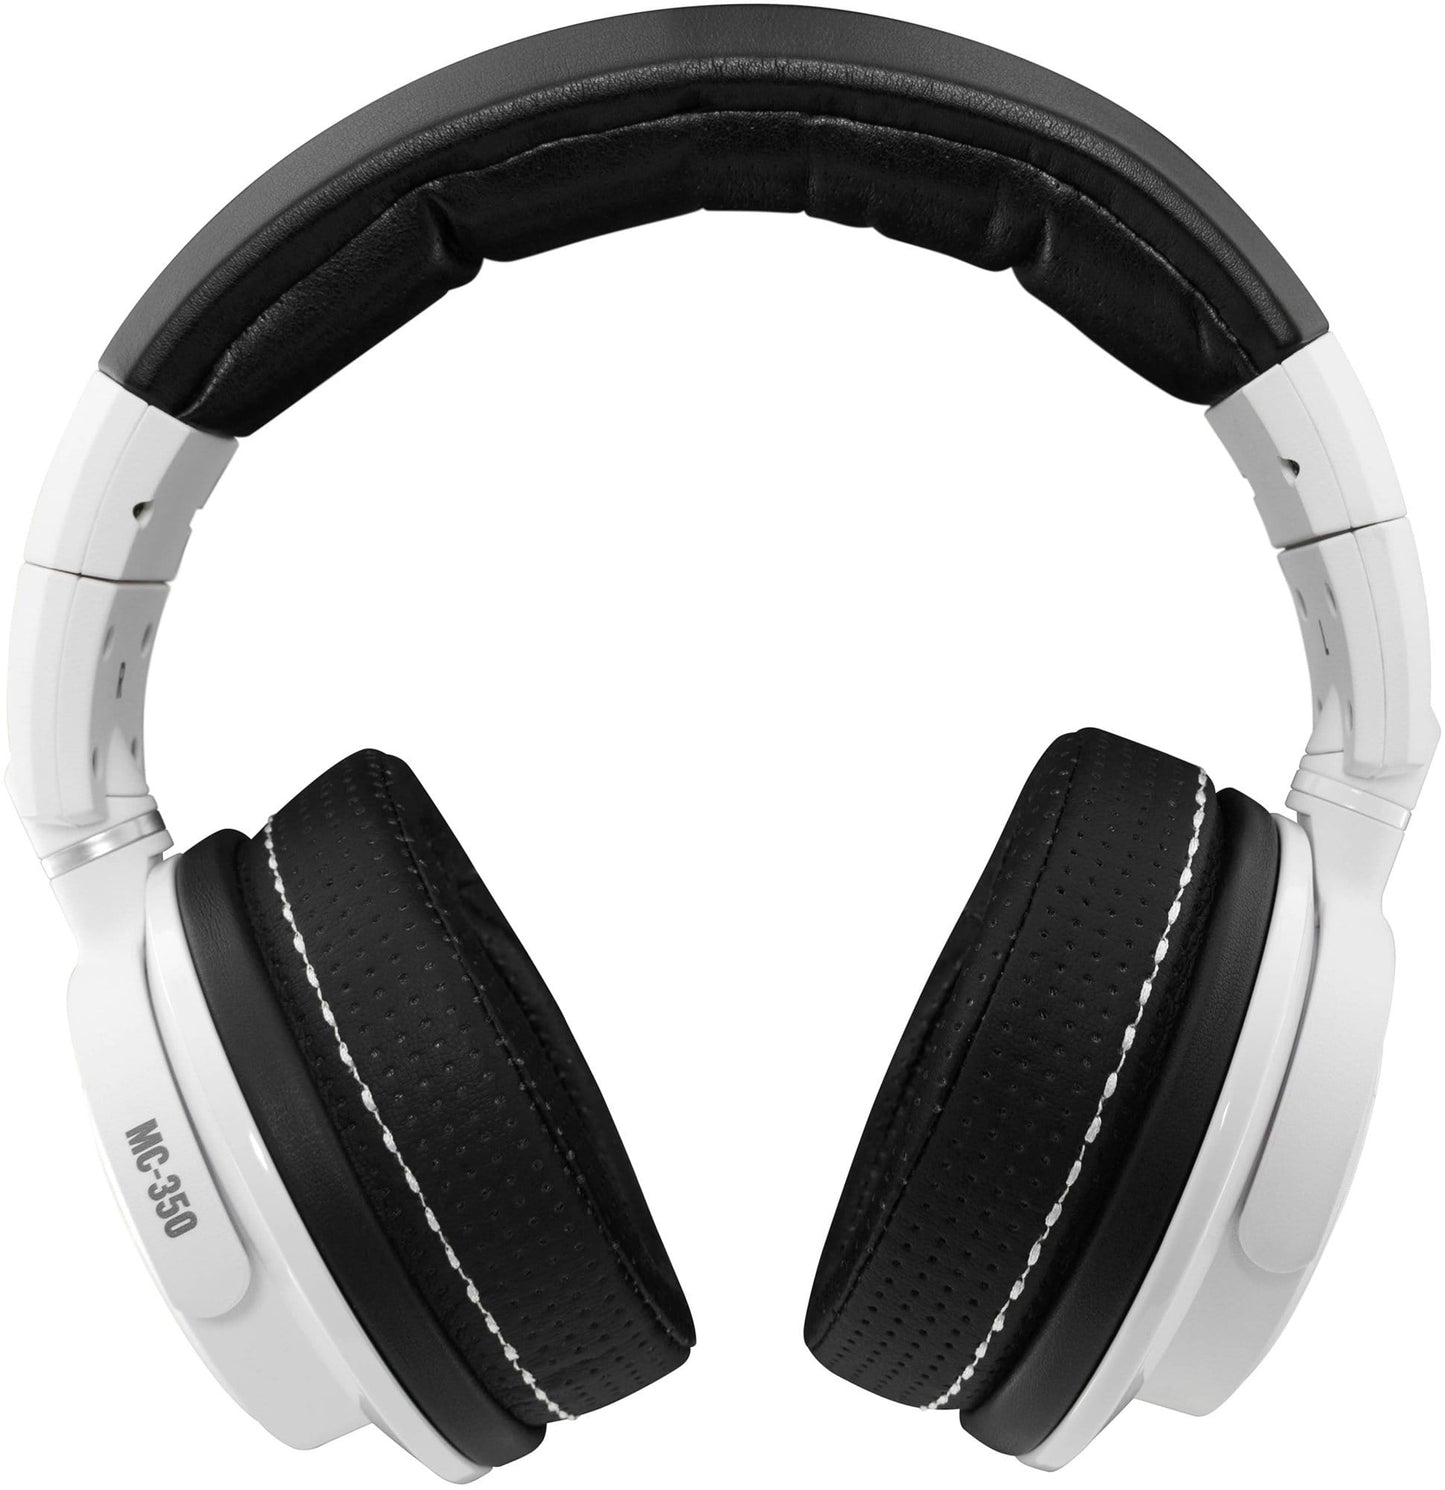 Mackie MC-350 Closed-Back Headphones - White - ProSound and Stage Lighting